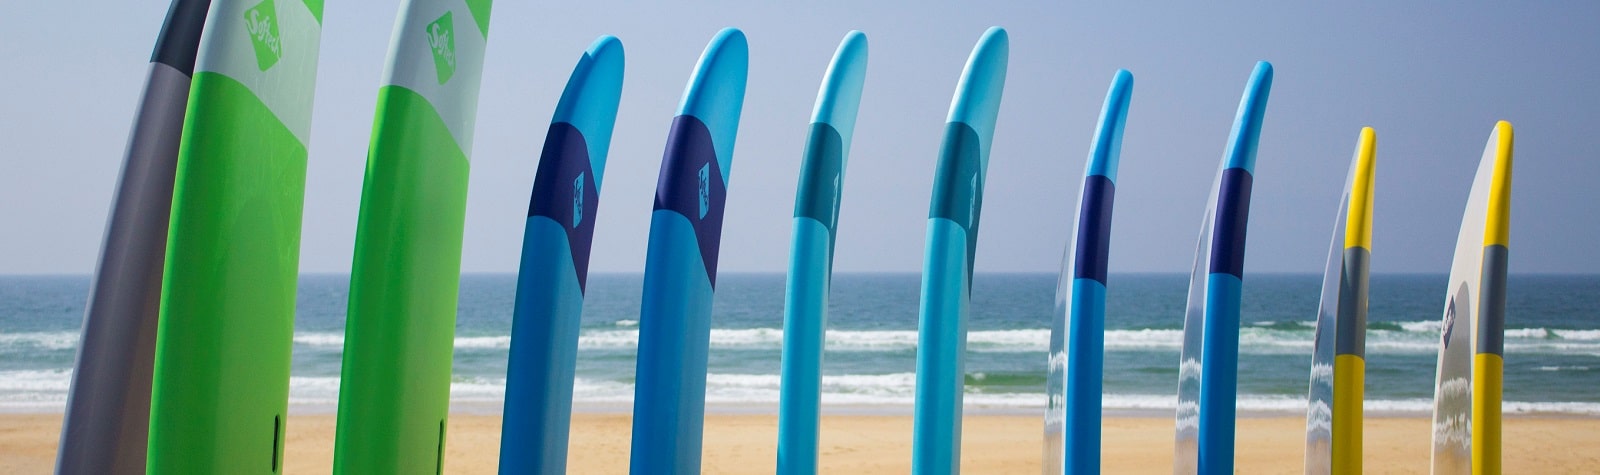 messanges surf school surfboards